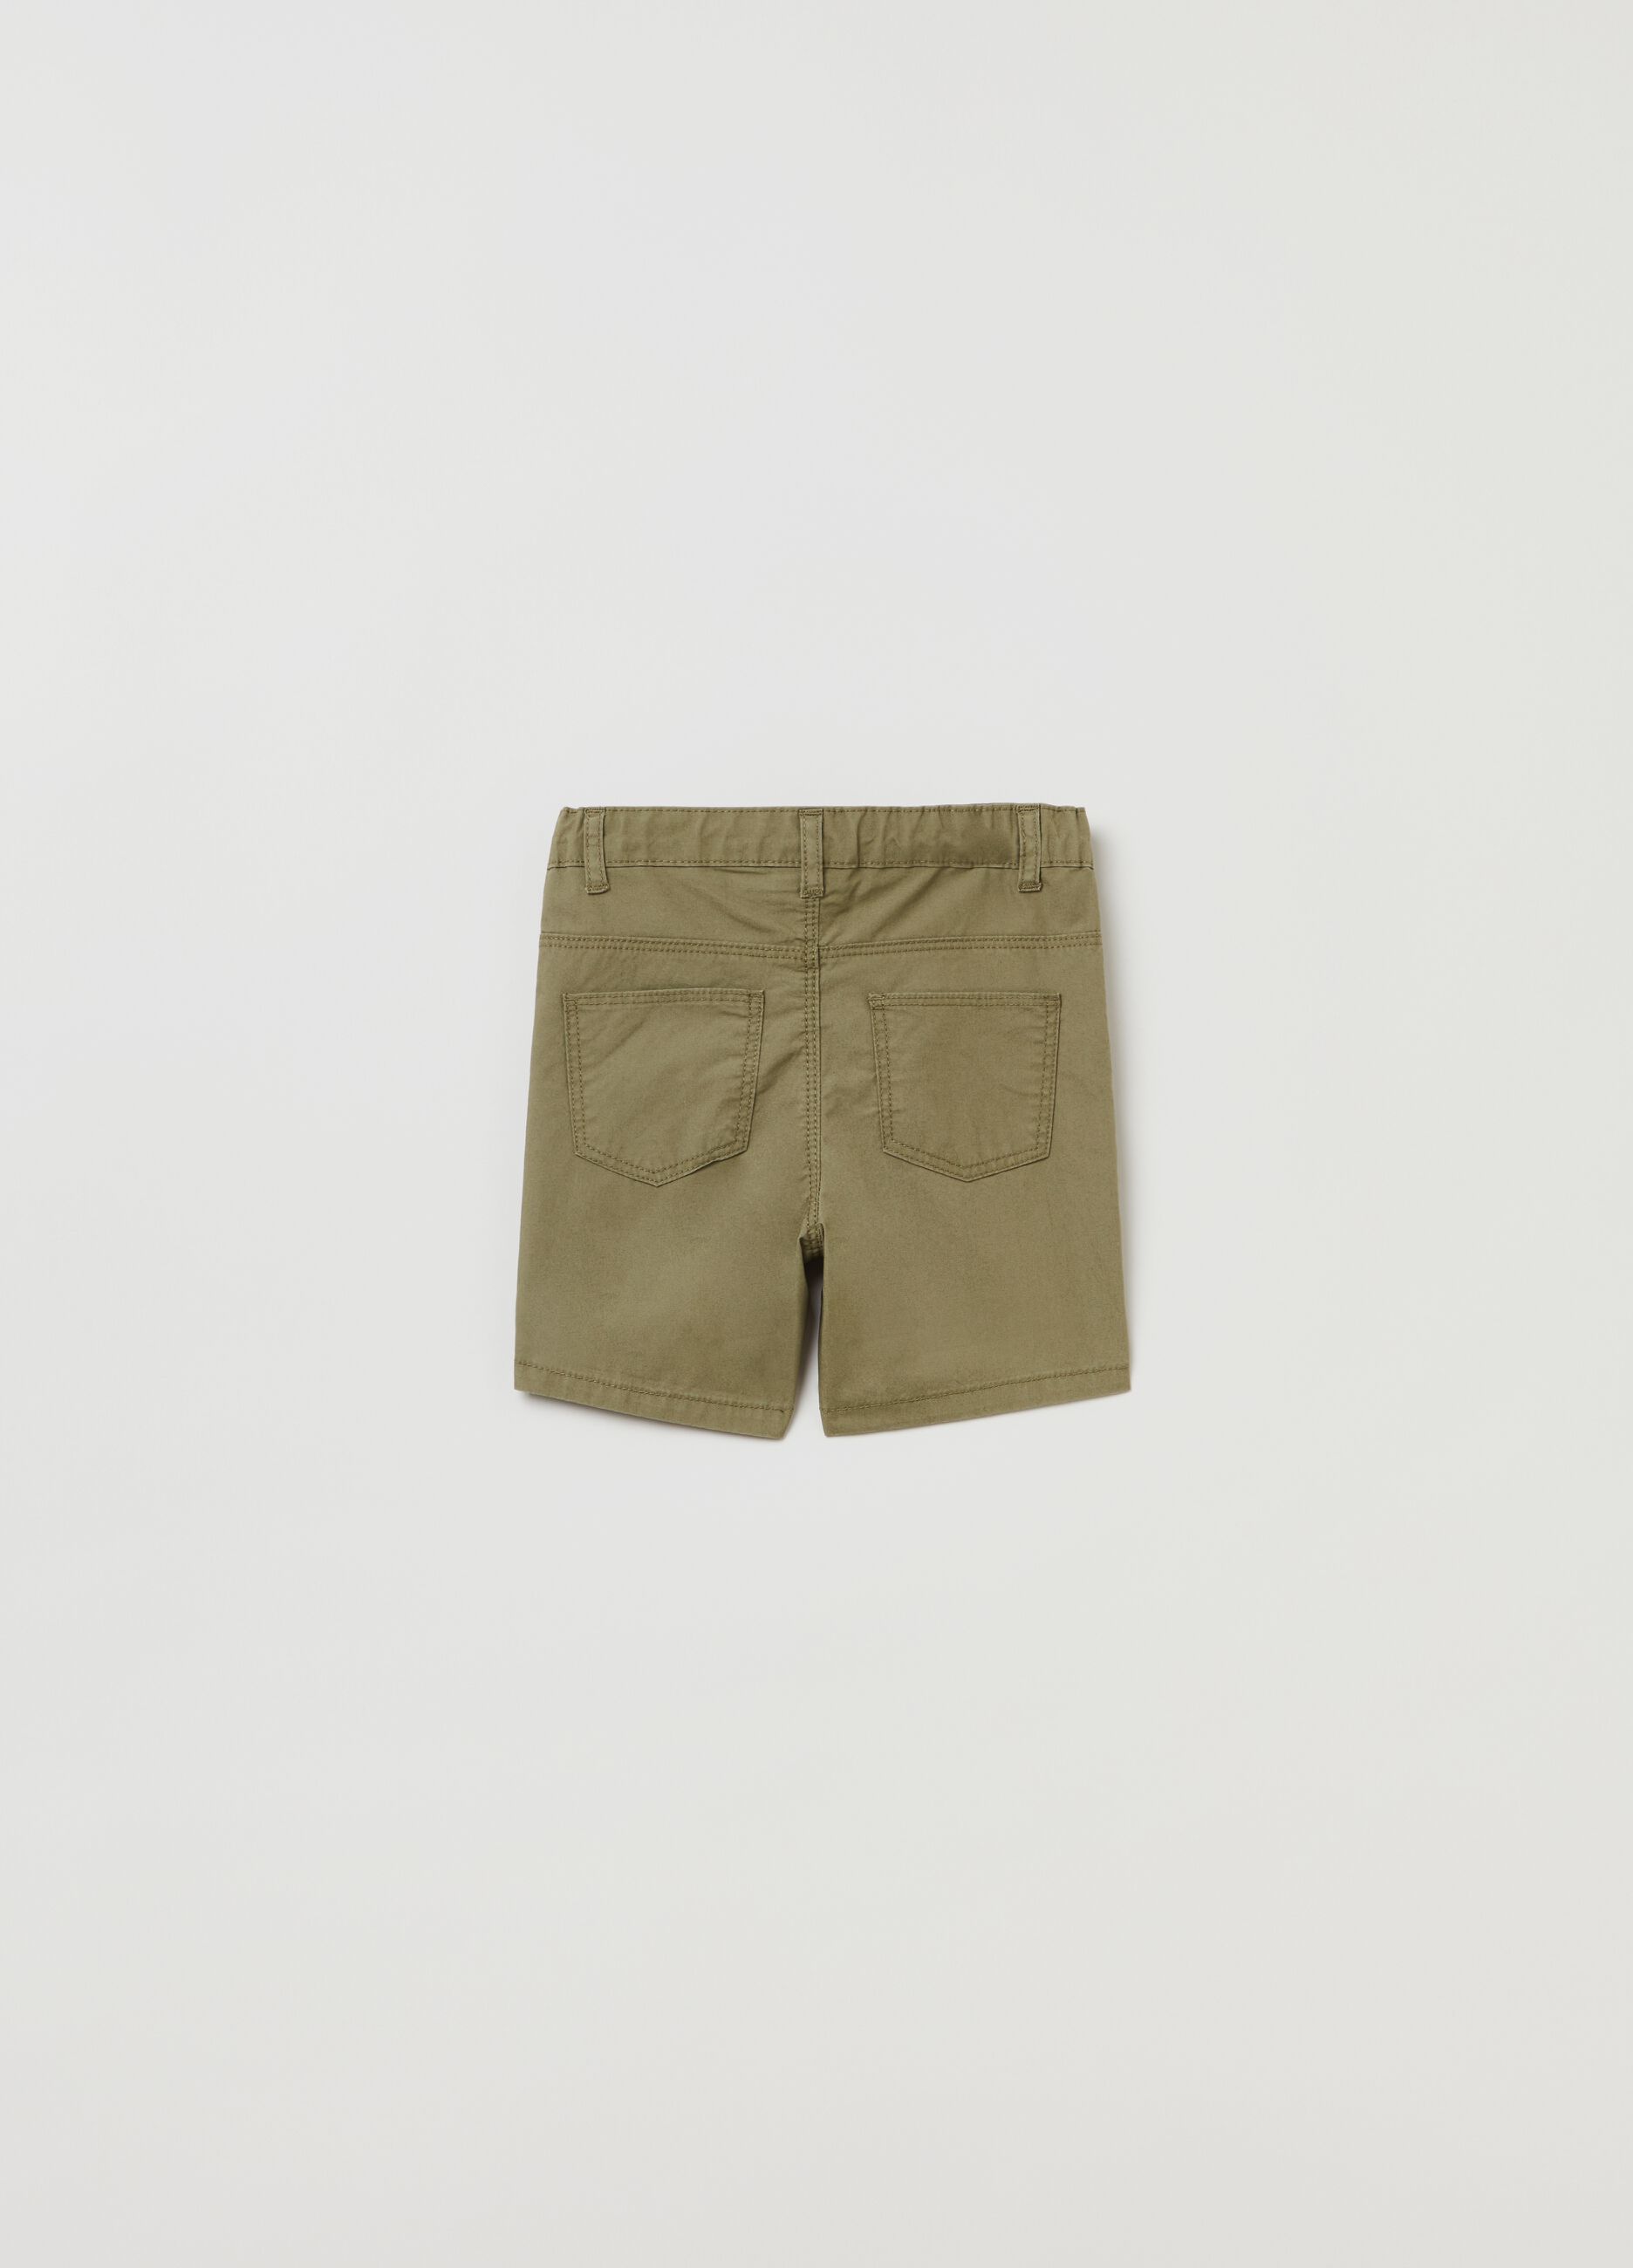 Solid colour poplin Bermuda shorts